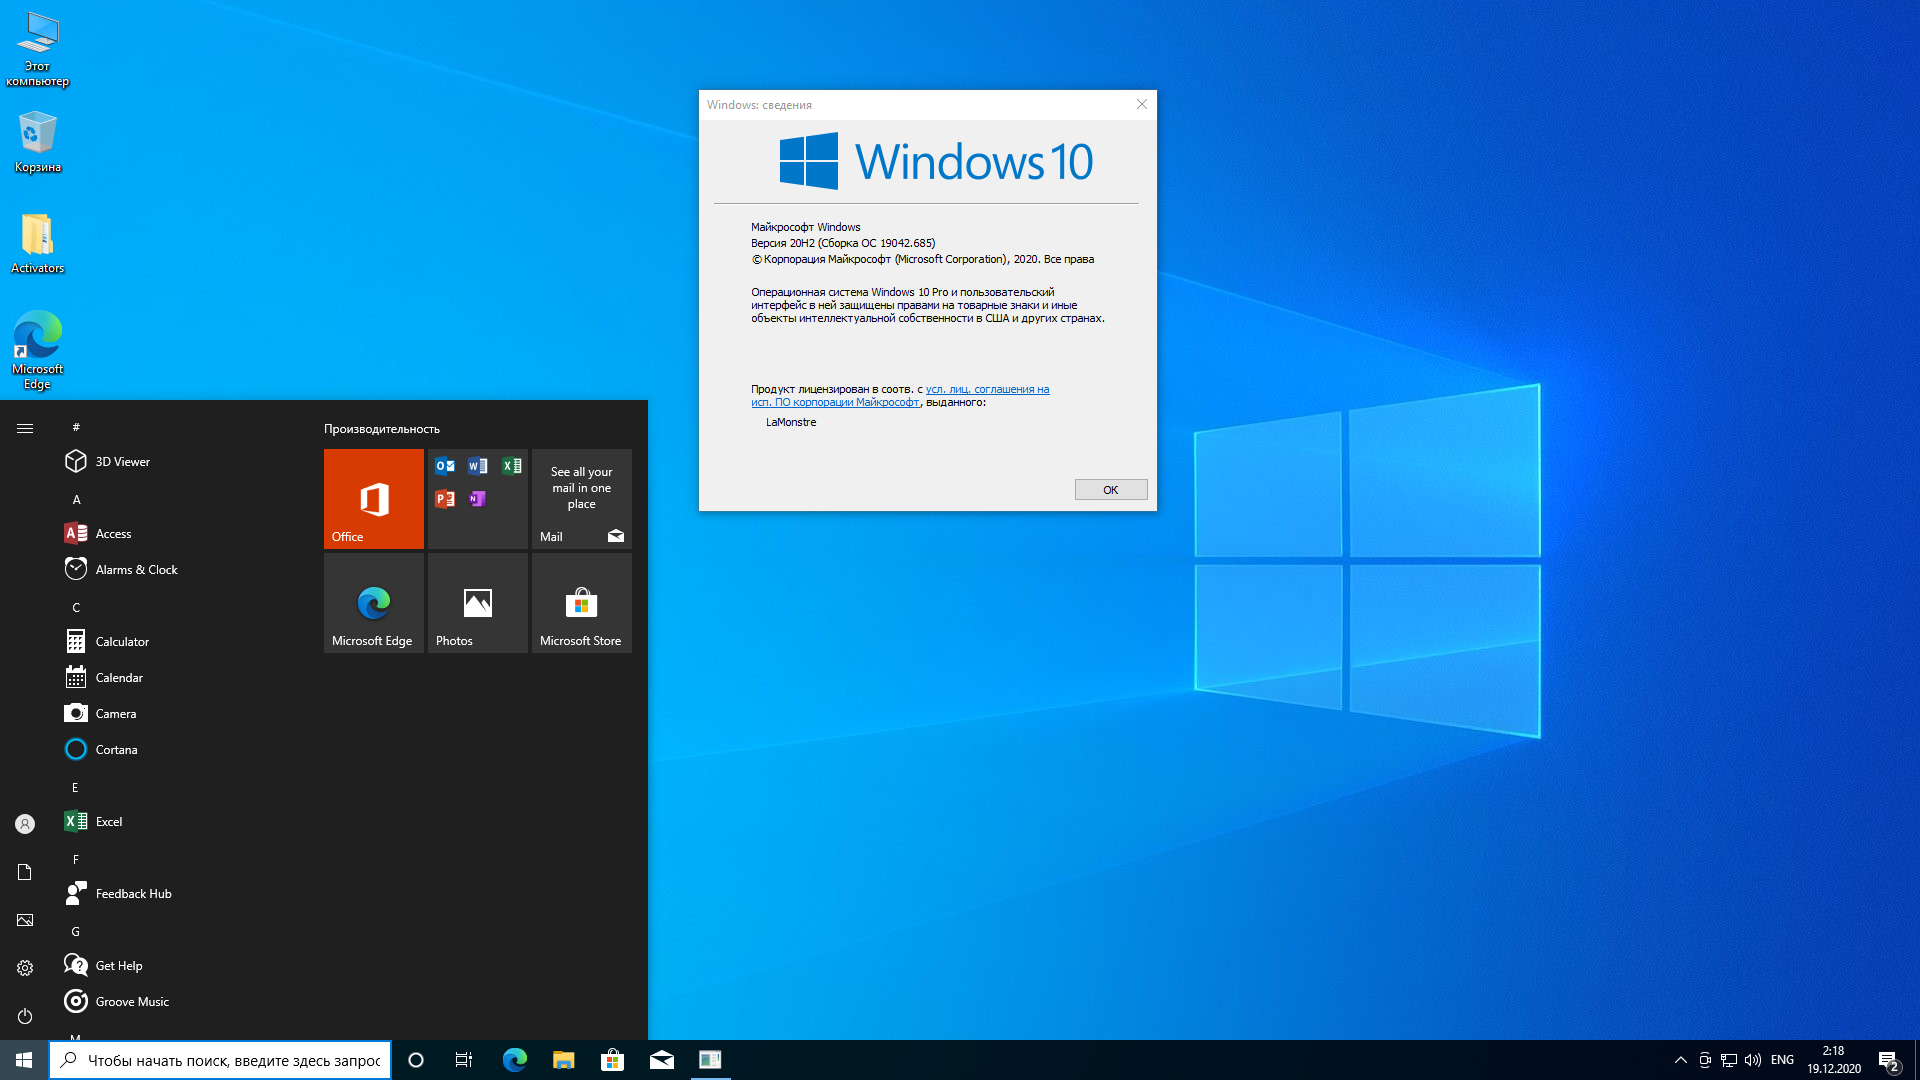 Delphi 10 windows 10 x64. Win 10 Pro 20h2. Виндовс 10 версия 20н2. Win 10 Home 20h2. Windows 10 Enterprise 20h2.